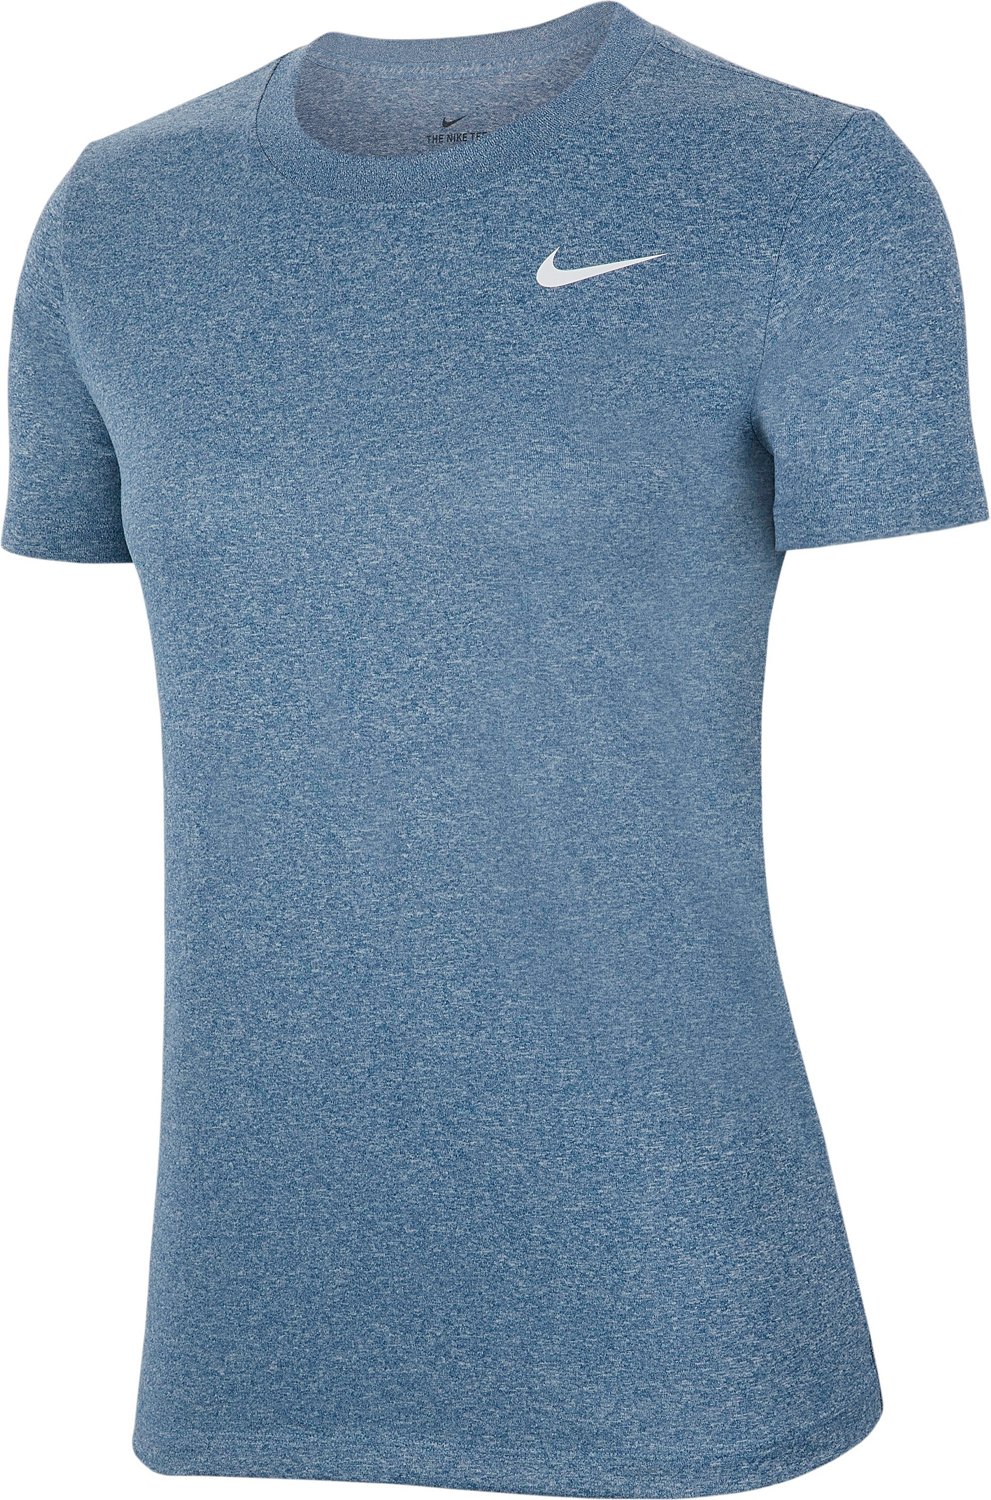 navy blue athletic shirt